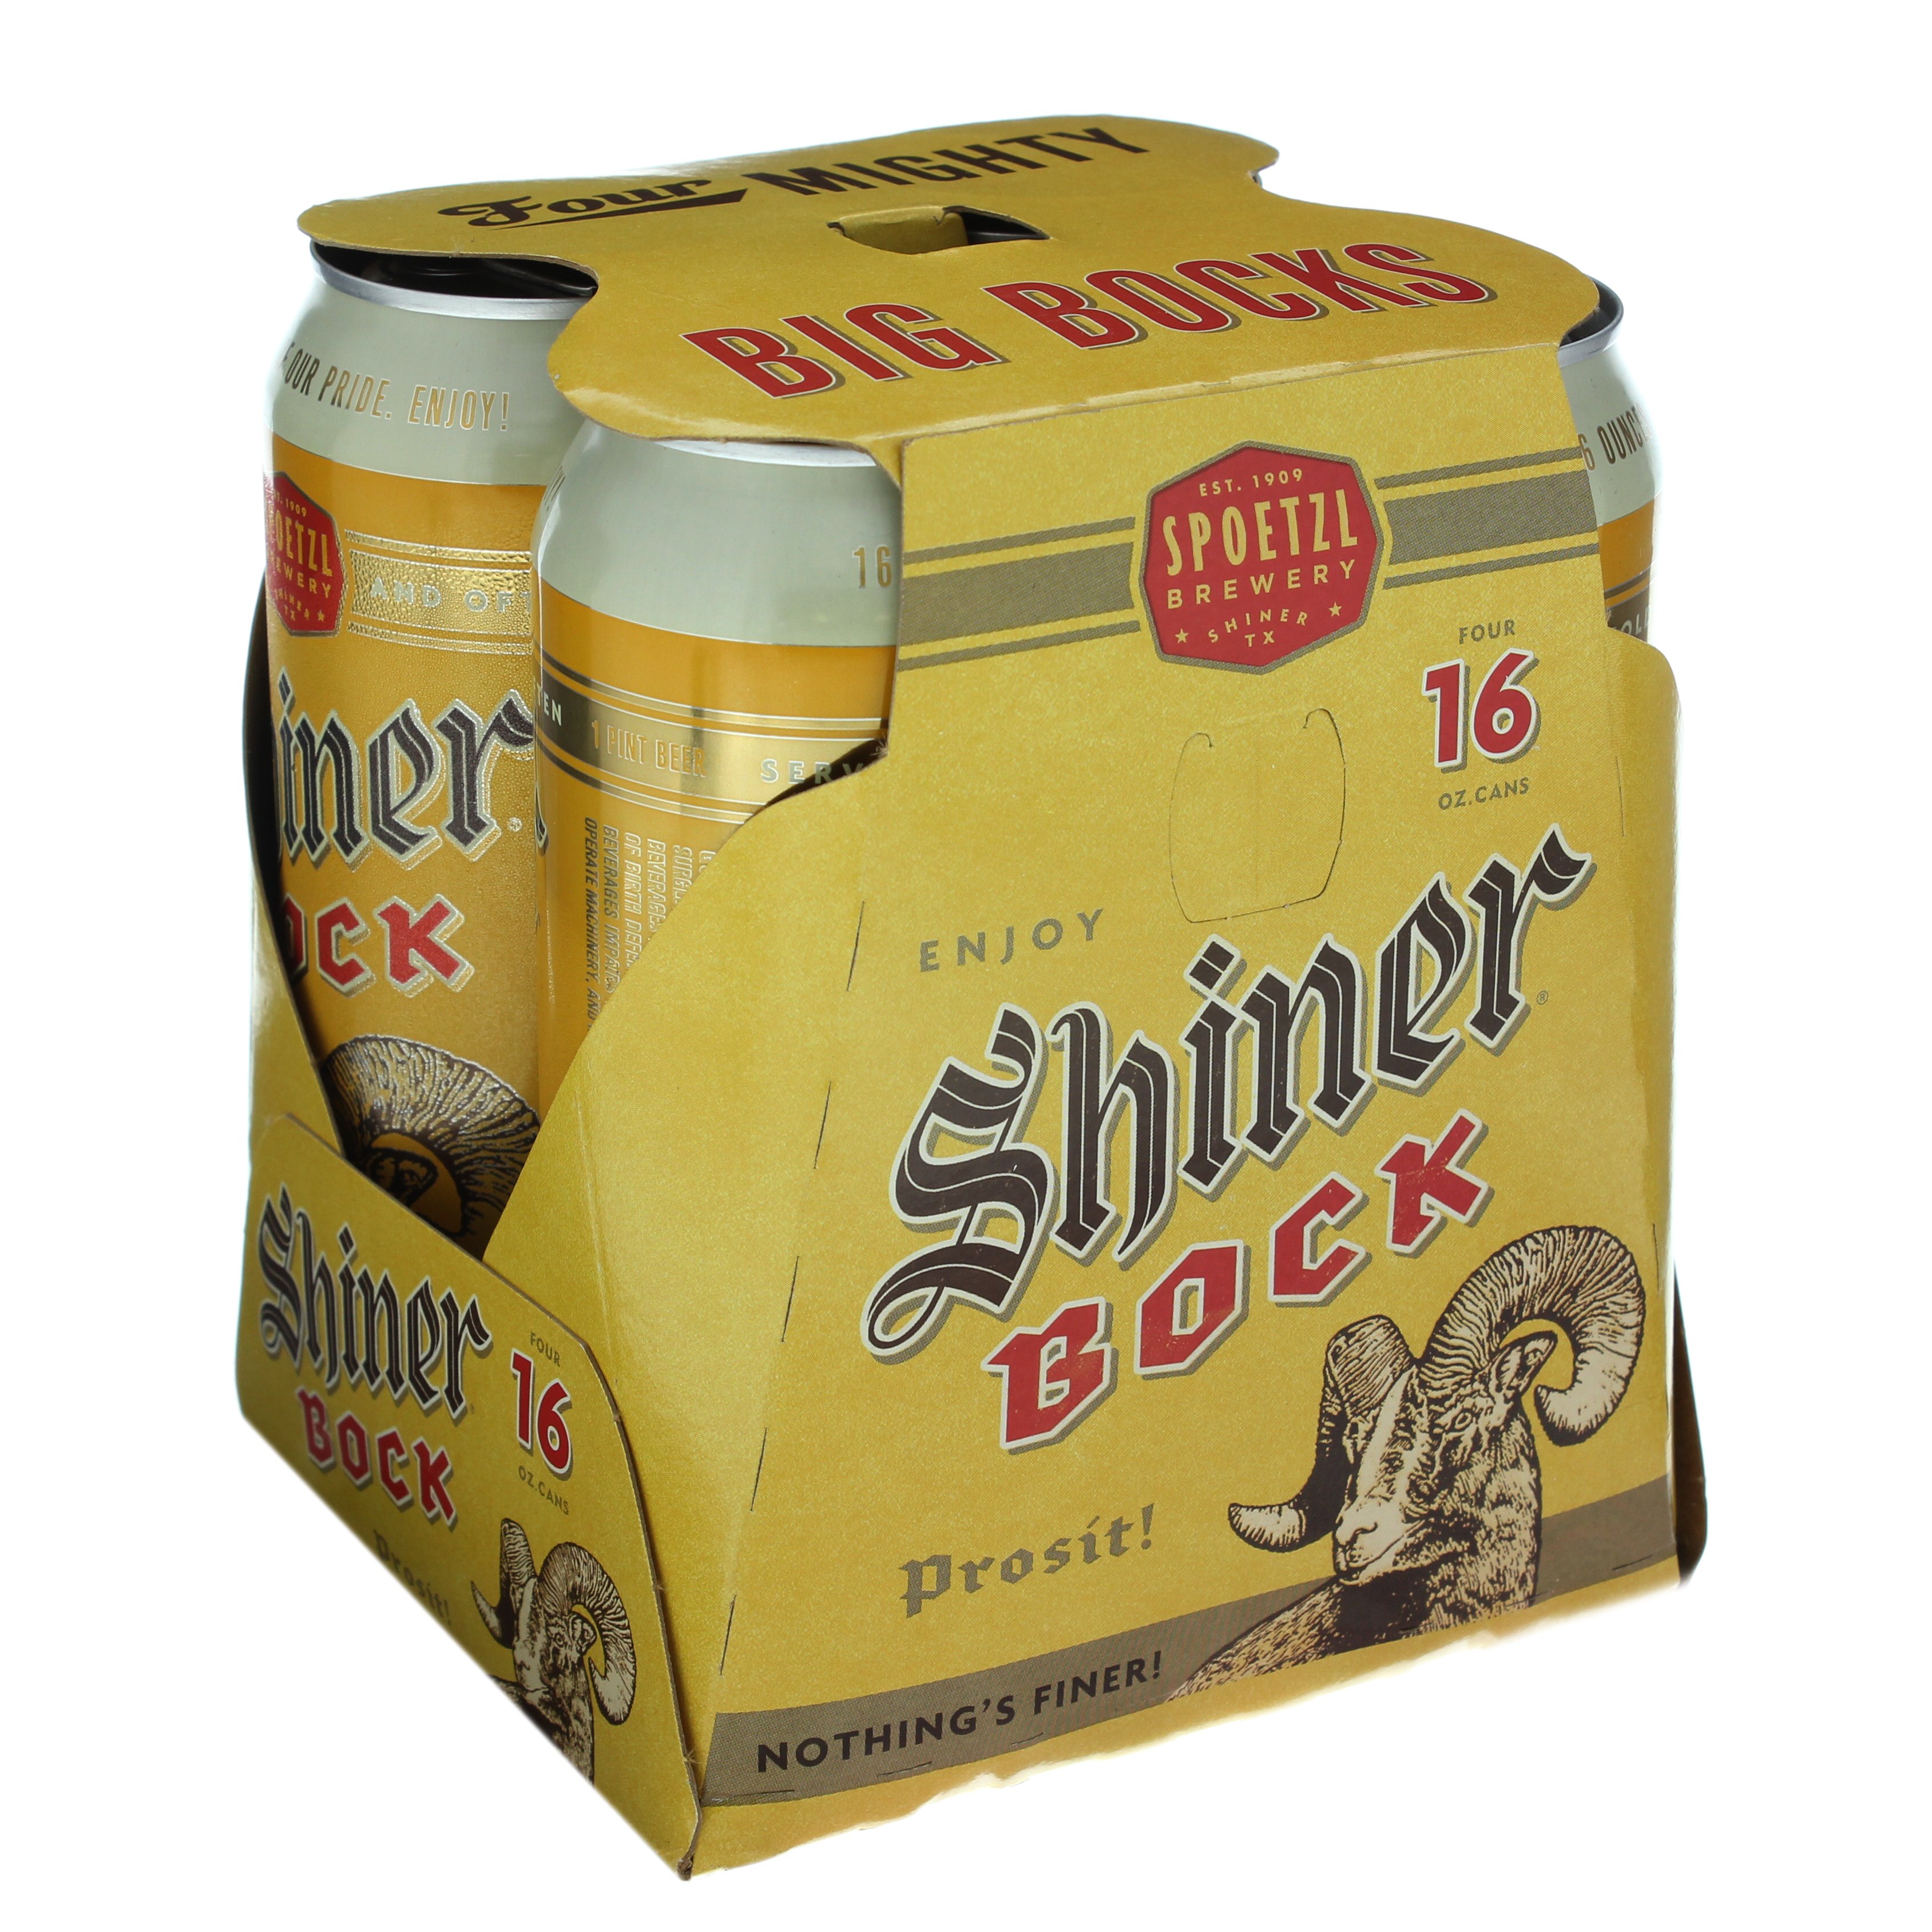 Shiner Bock Big Bock Beer 16 Oz Cans Shop Beer At H E B